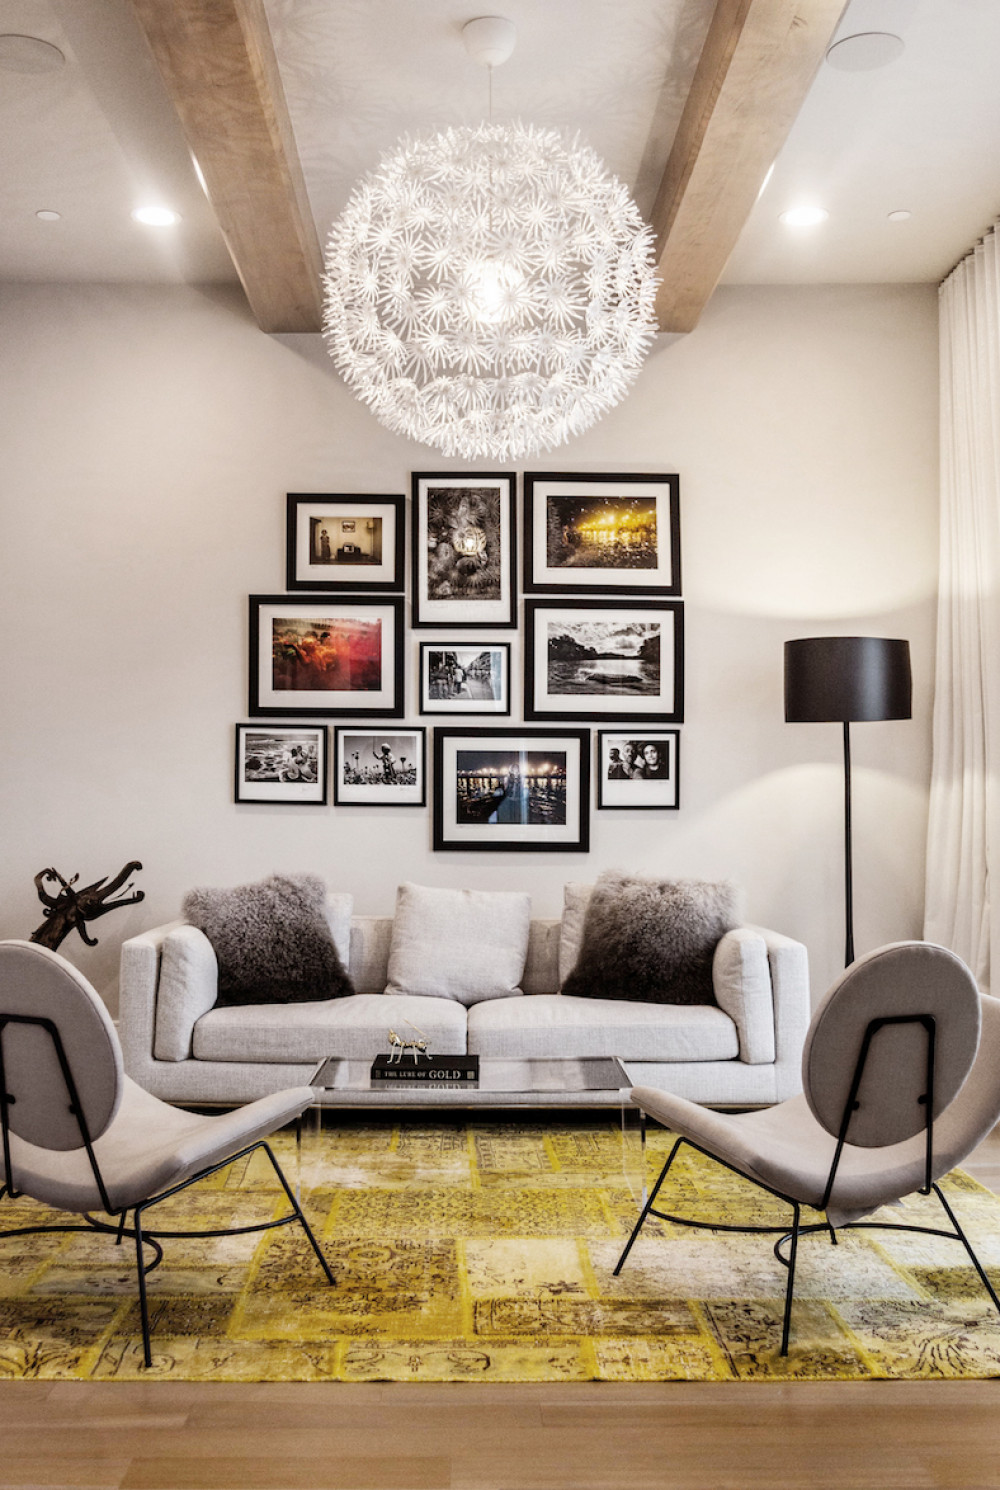 beyond-interior-design-living-room-design-gallery-wall-round-chandelier